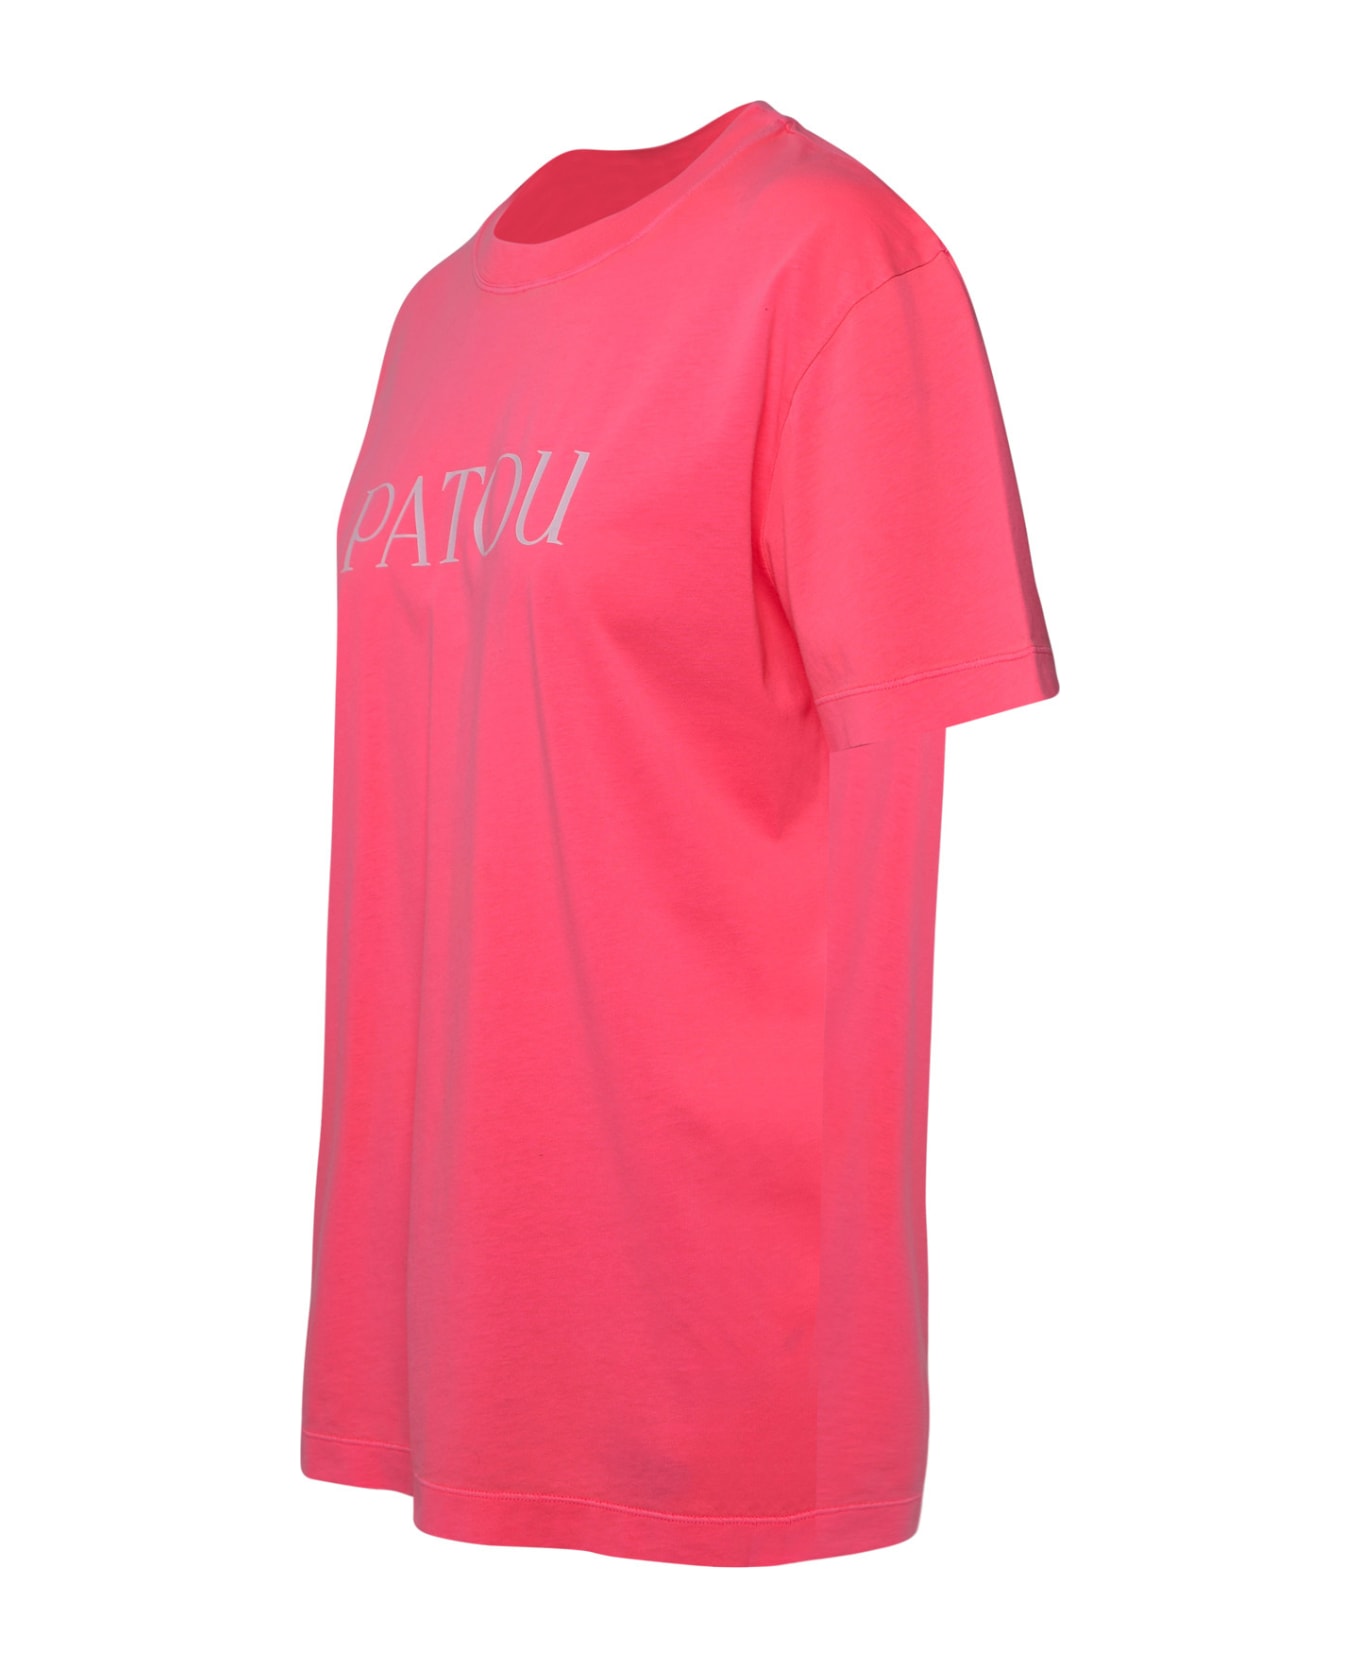 Patou Essential Logo Neon Pink Cotton T-shirt - Pink